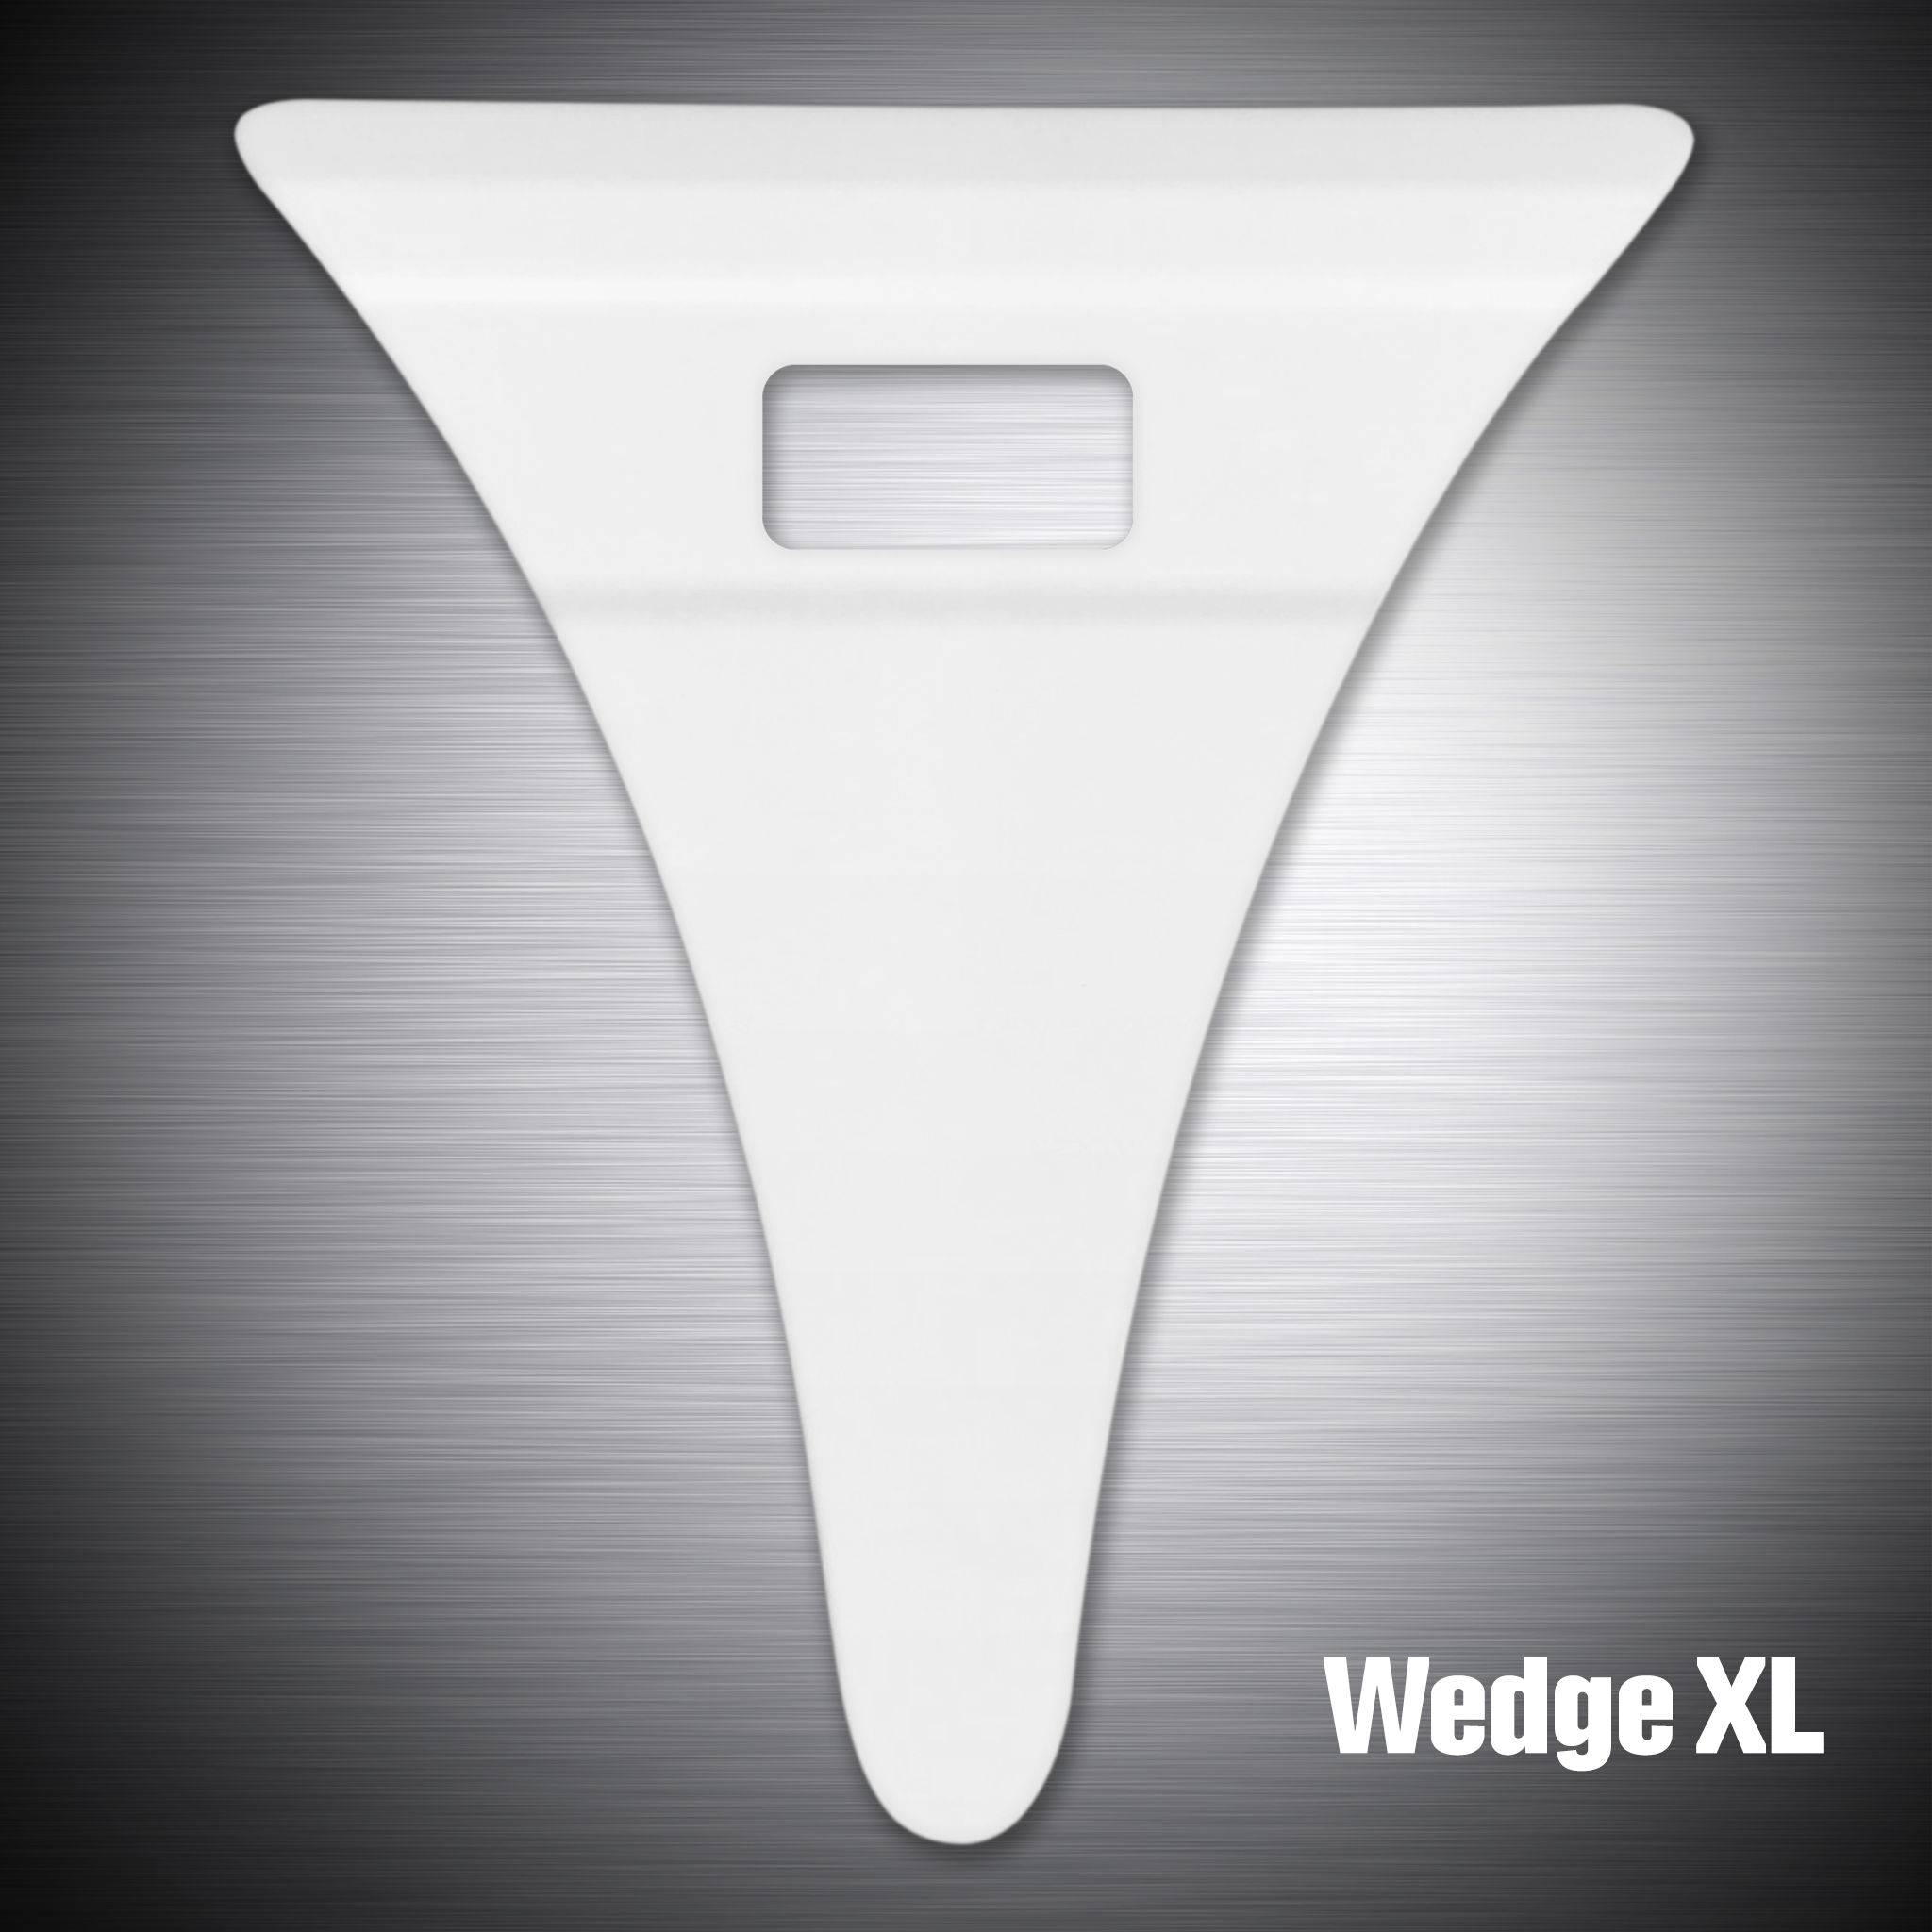 Wedge XL prepared for Original side marking light